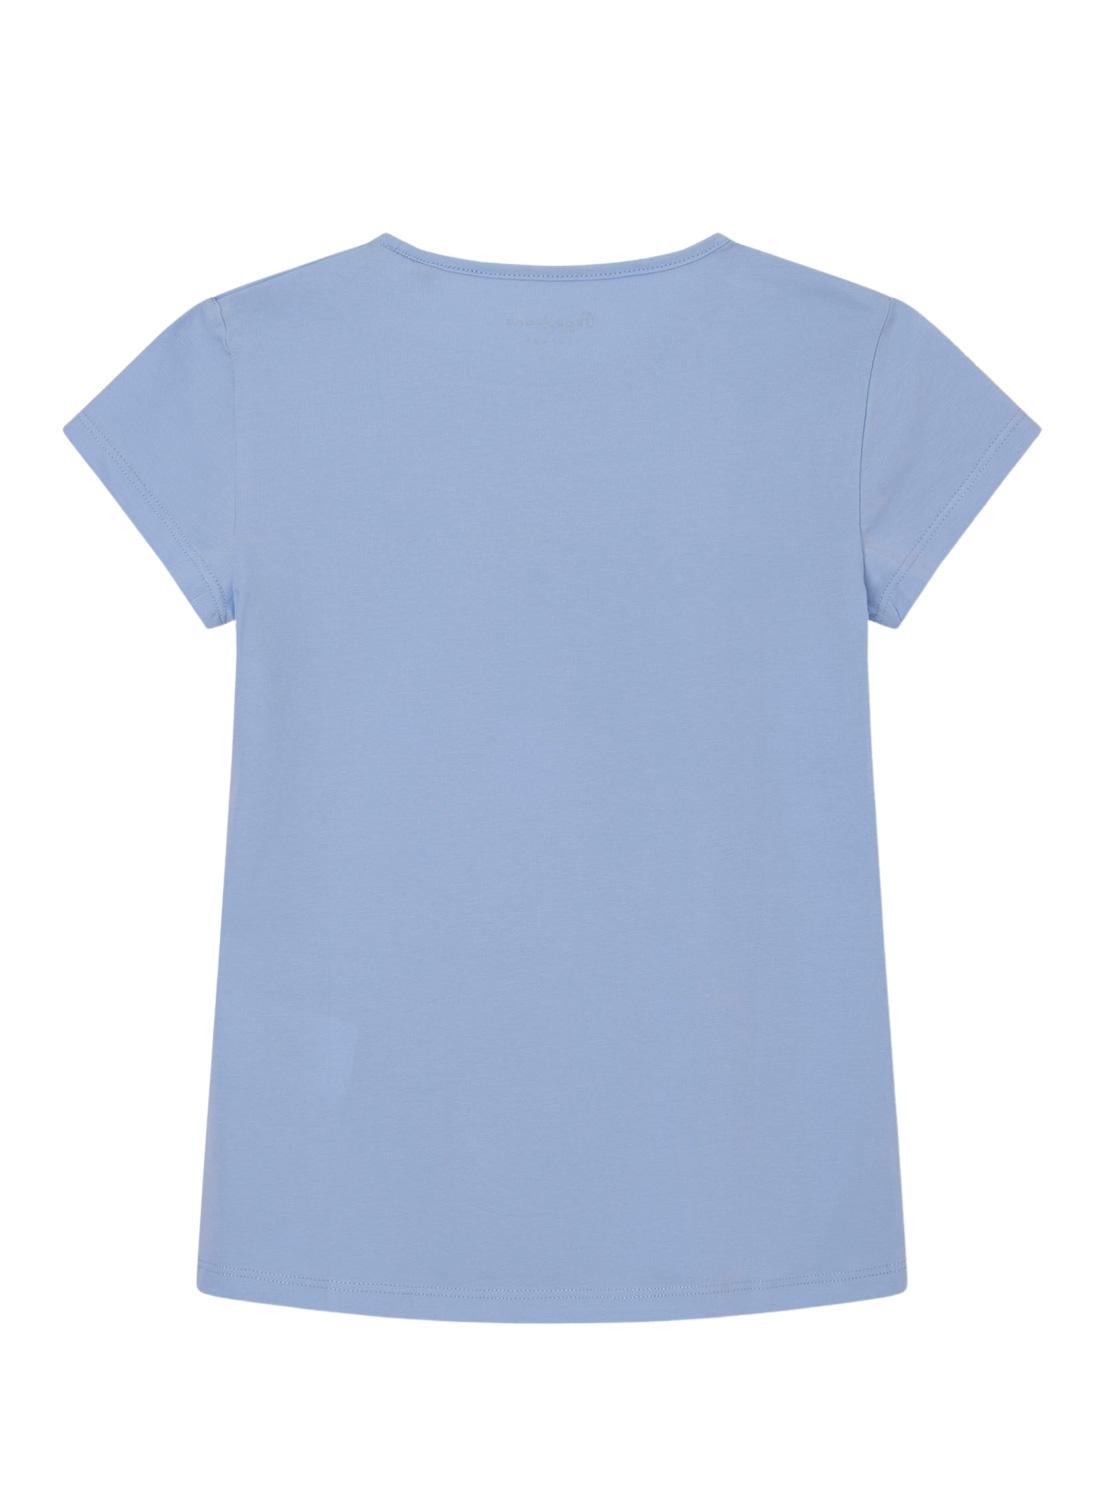 T-Shirt Pepe Jeans Hanna Blu per Bambina